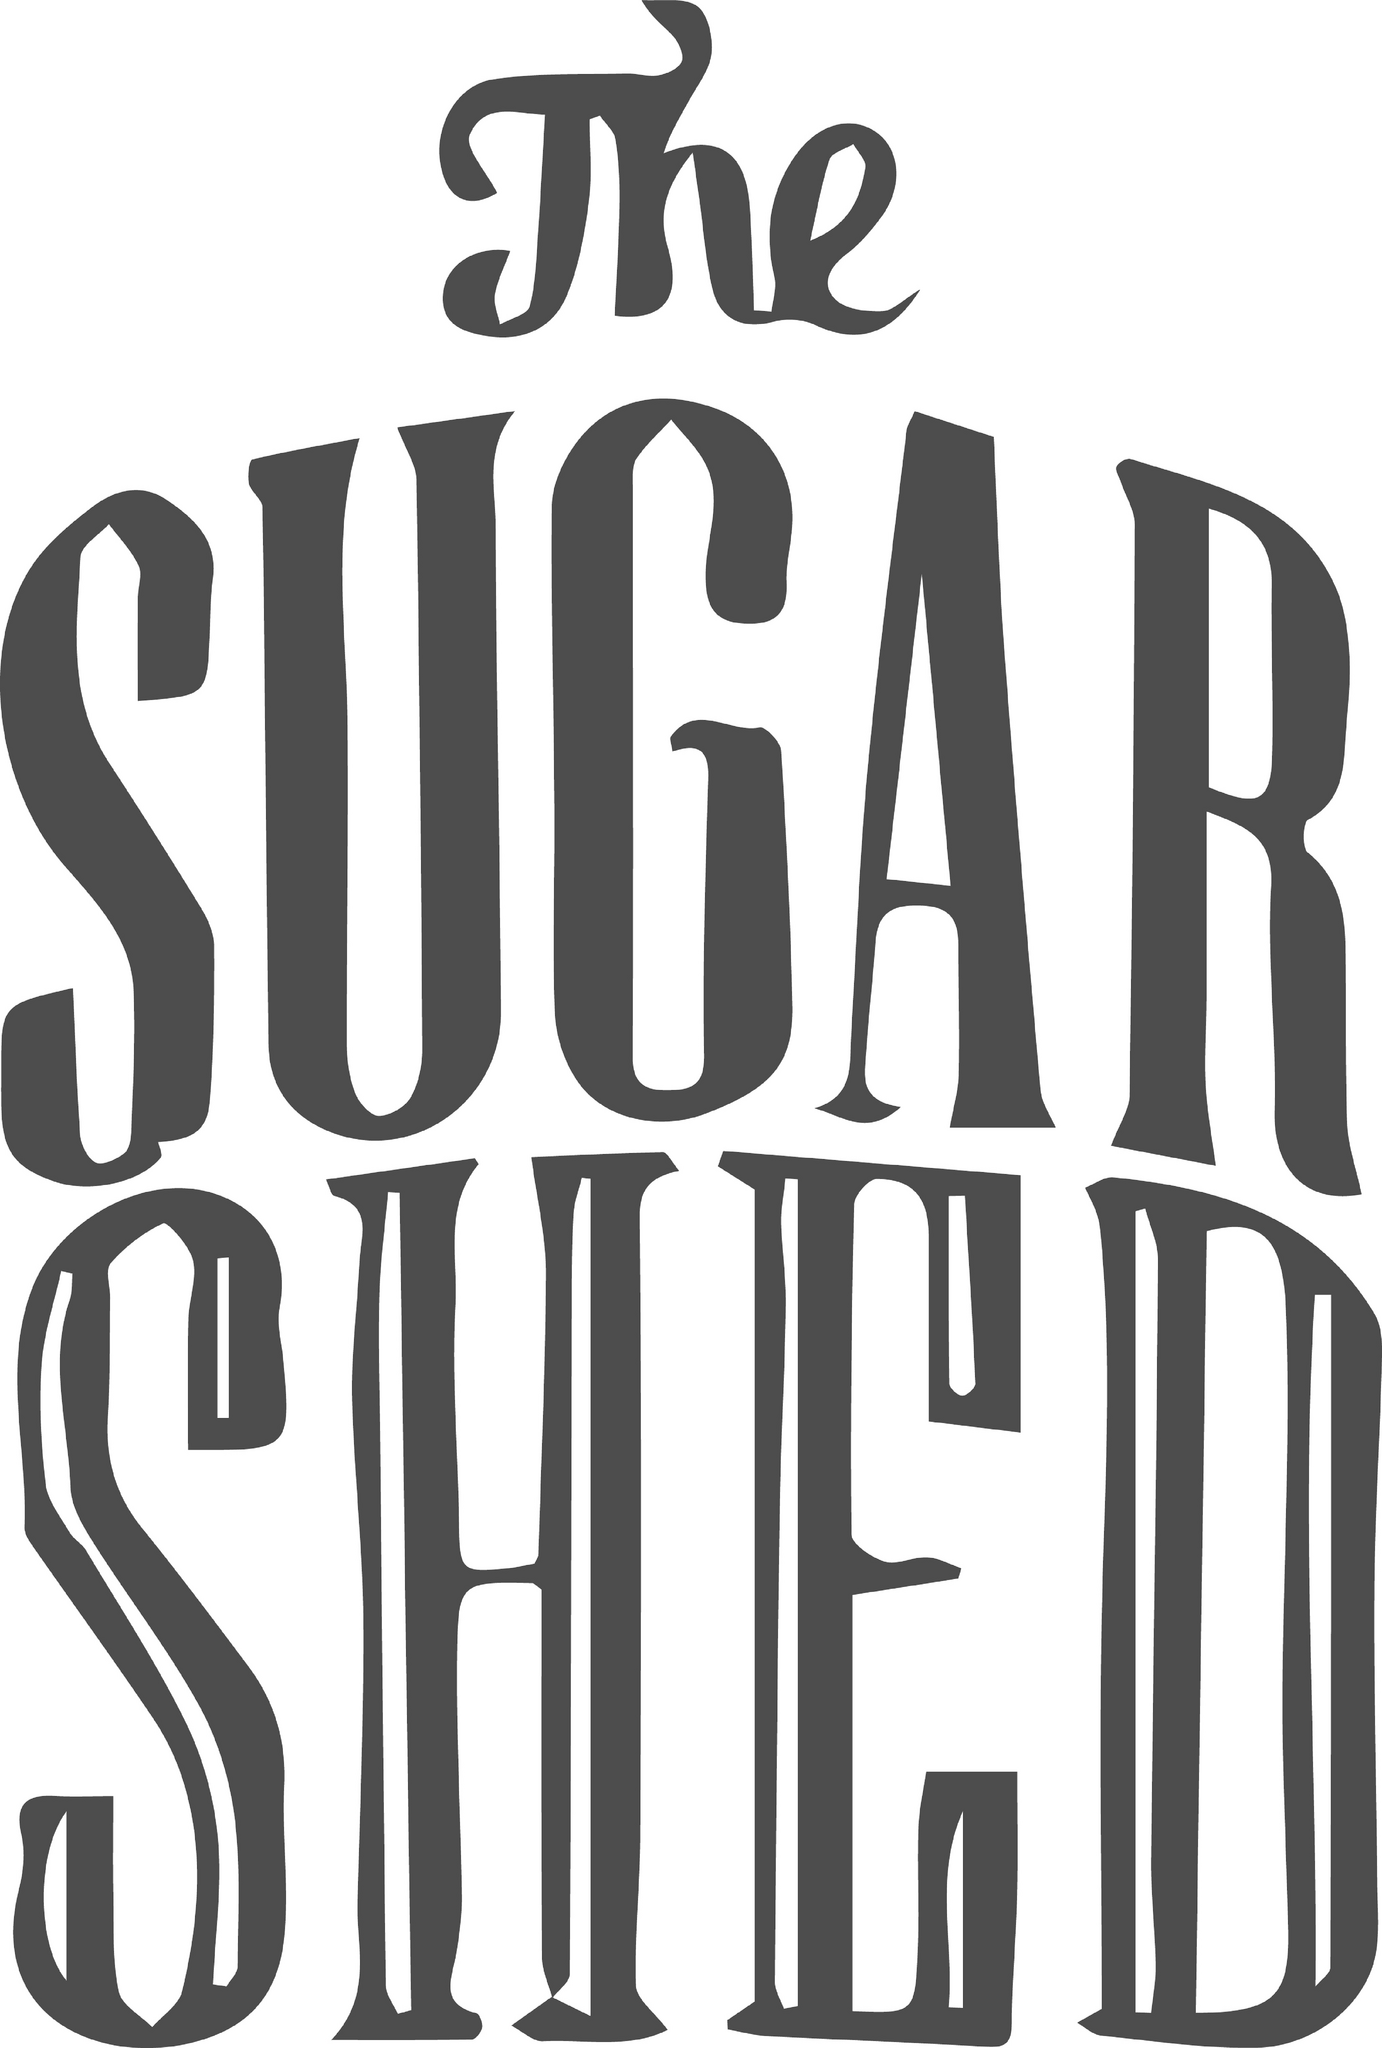 The Sugar Shed Ltd